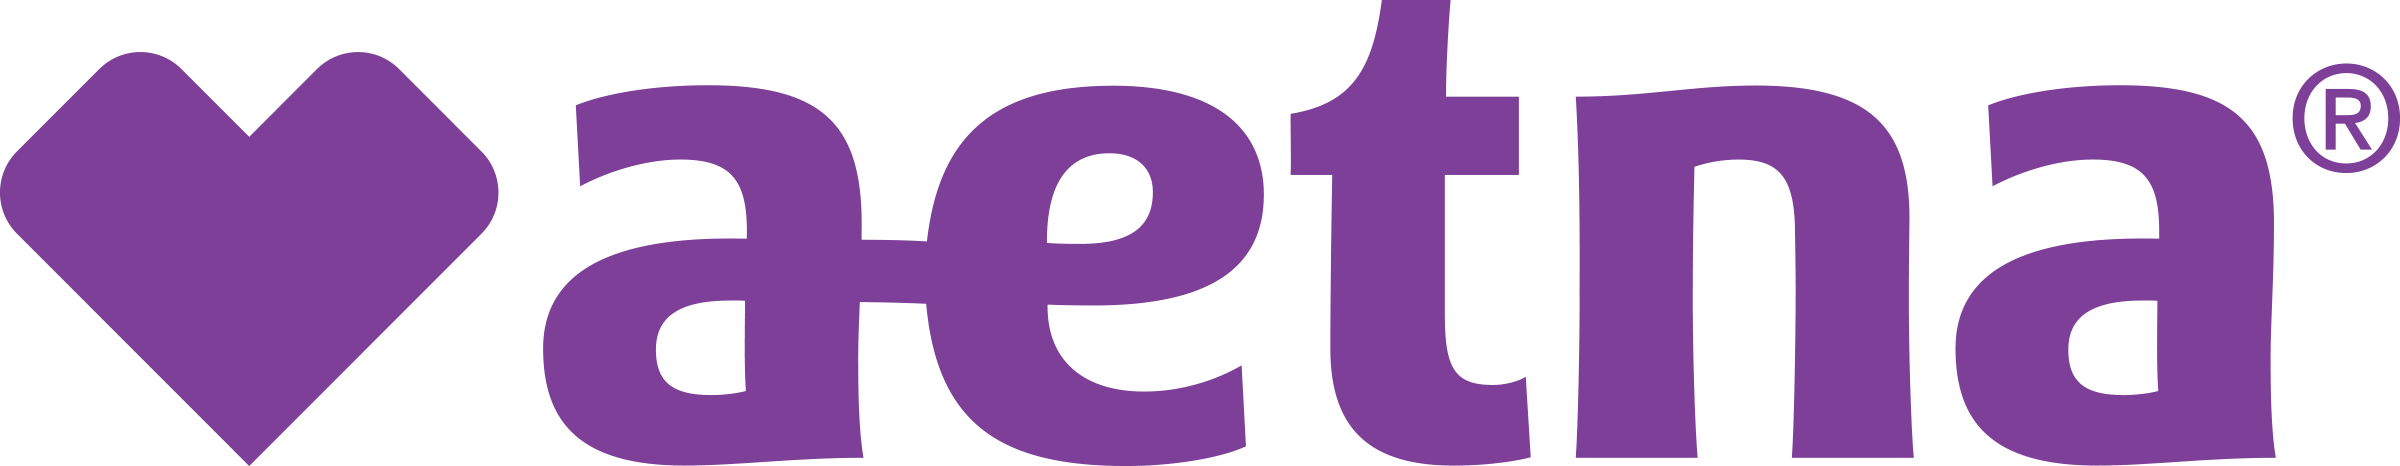 Aetna-reg-mark-logo